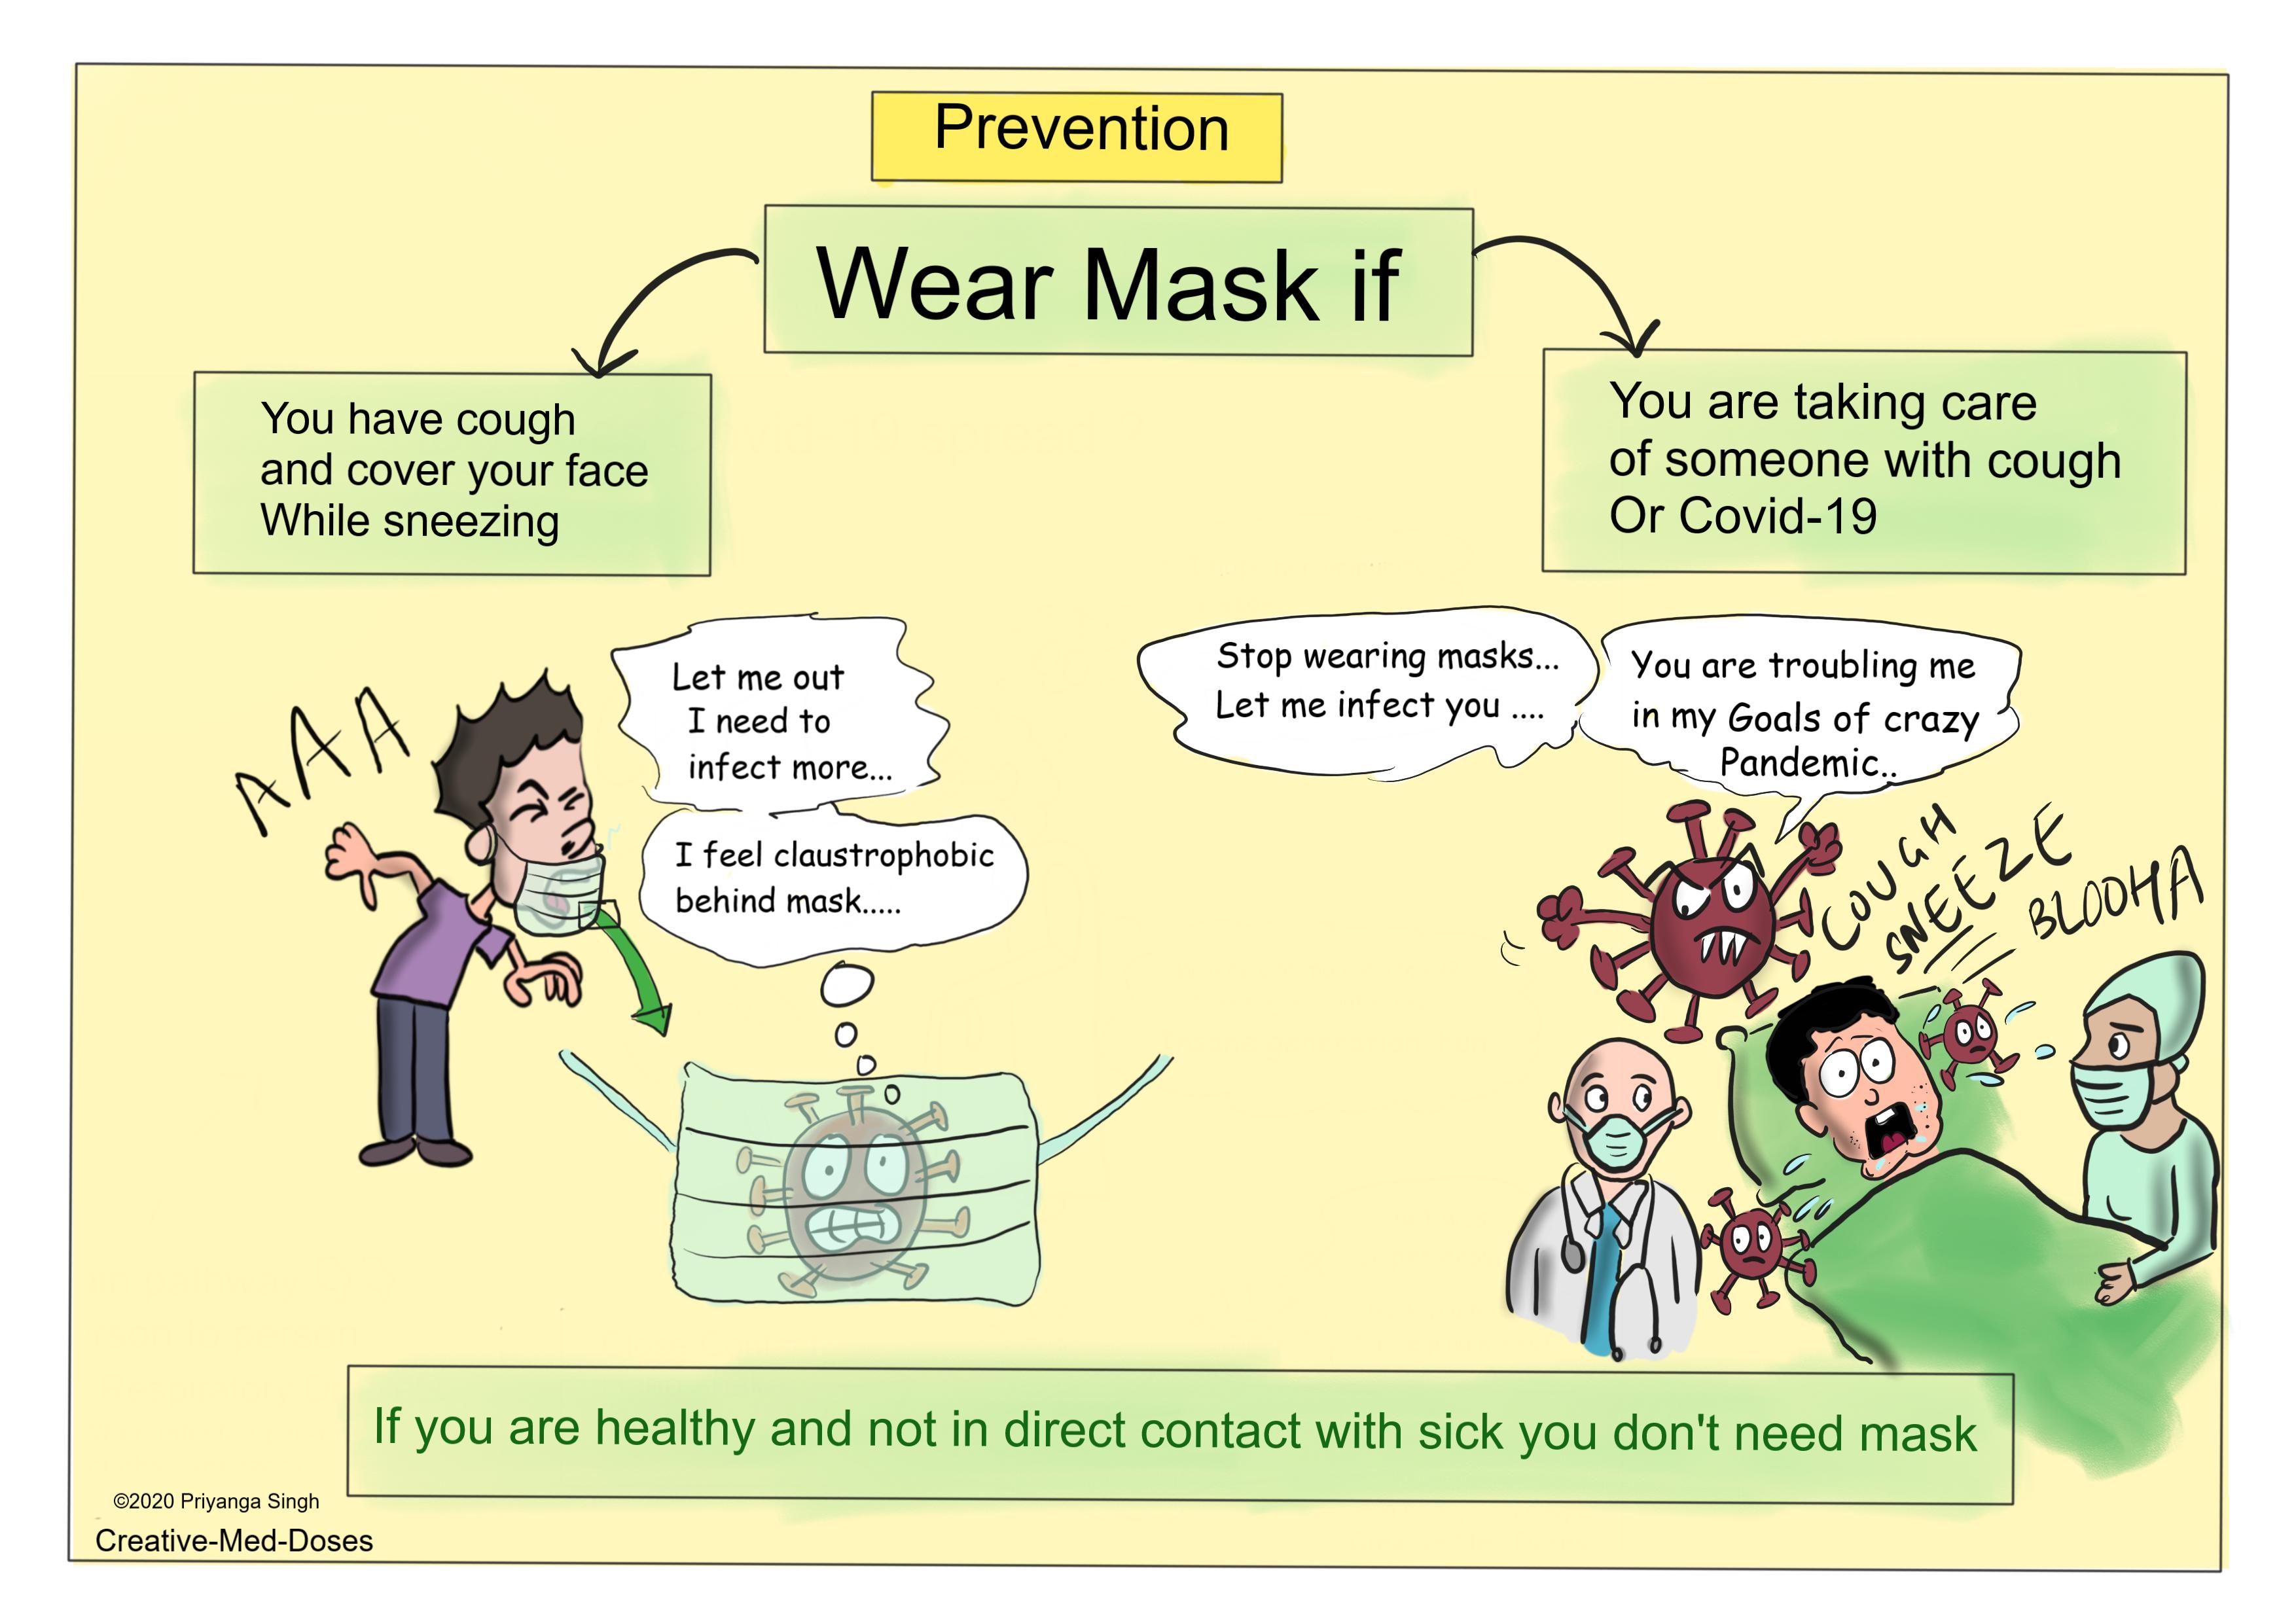 covid-19: Who should wear mask